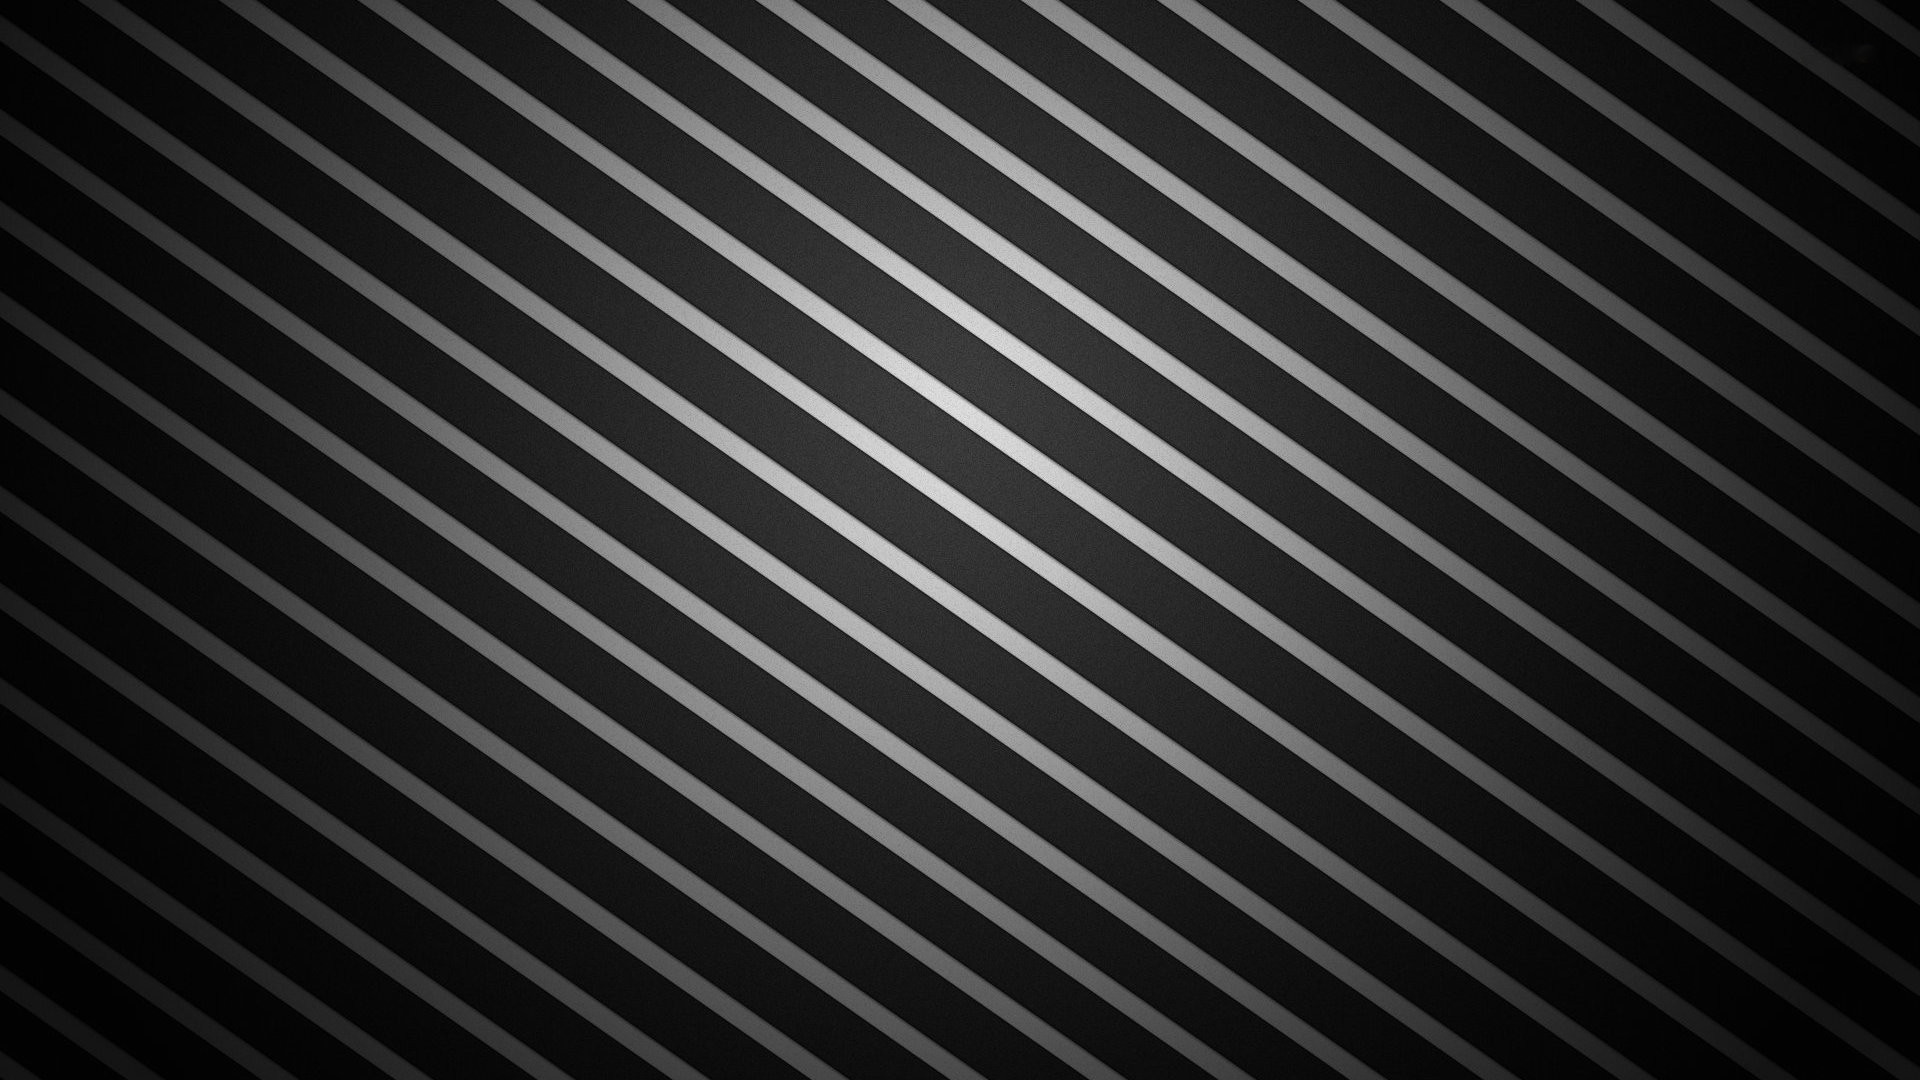 1920x1080 Malabar Wallpaper Black wallpaper with large metallic silver | Wallpapers  For Desktop | Pinterest | Wallpaper and Hd wallpaper